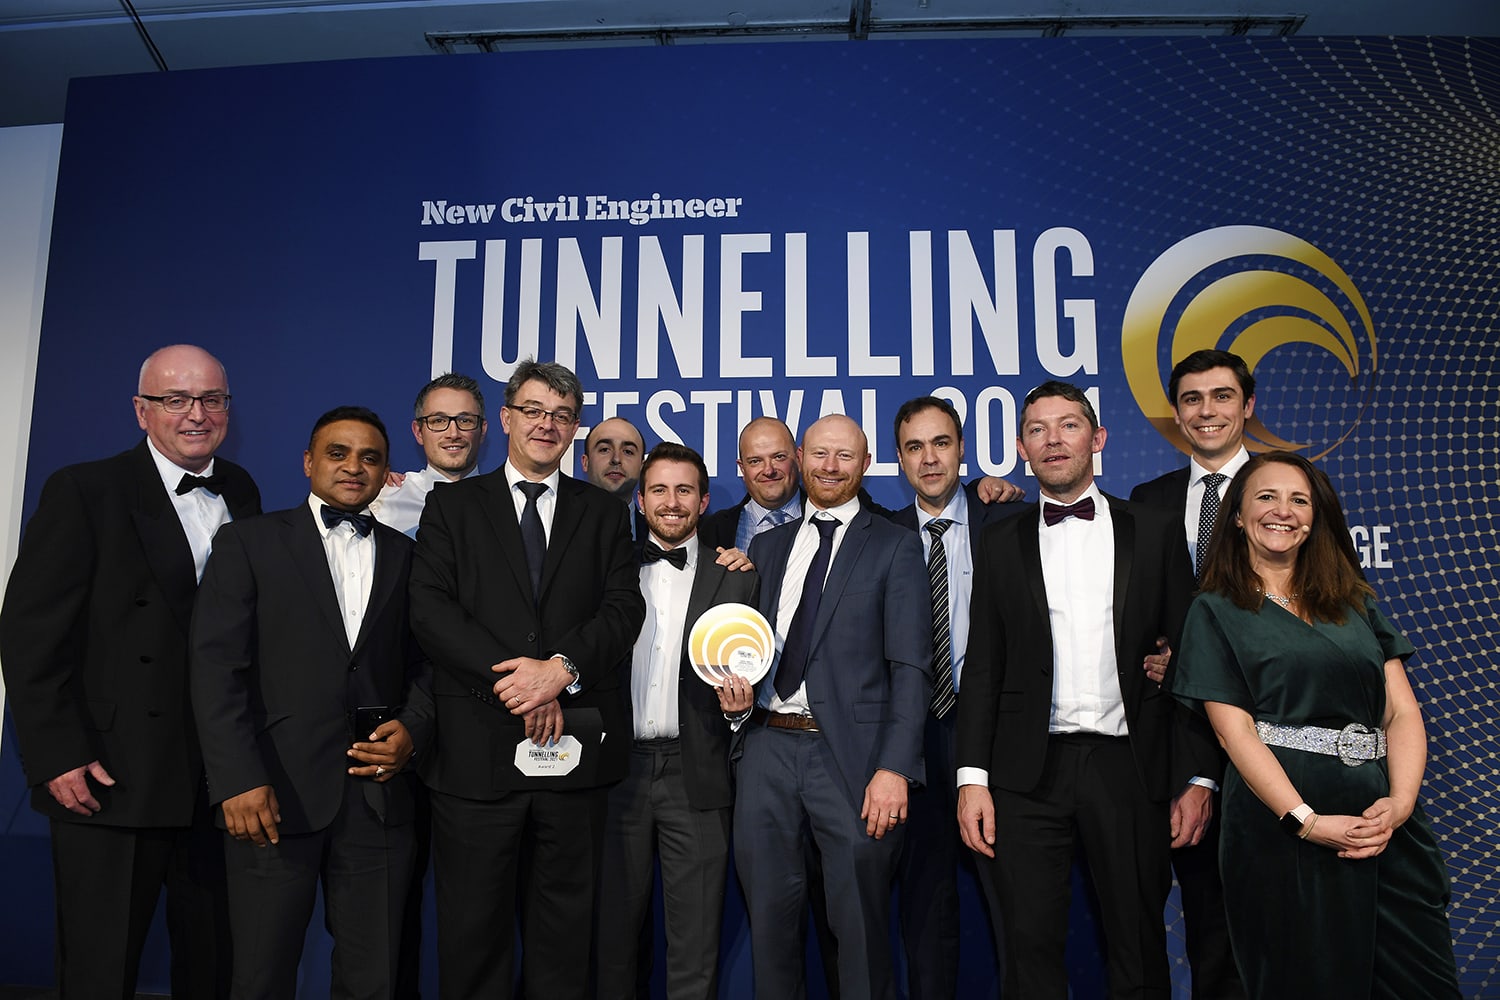 NCE Tunnelling Festival 2021 Winners